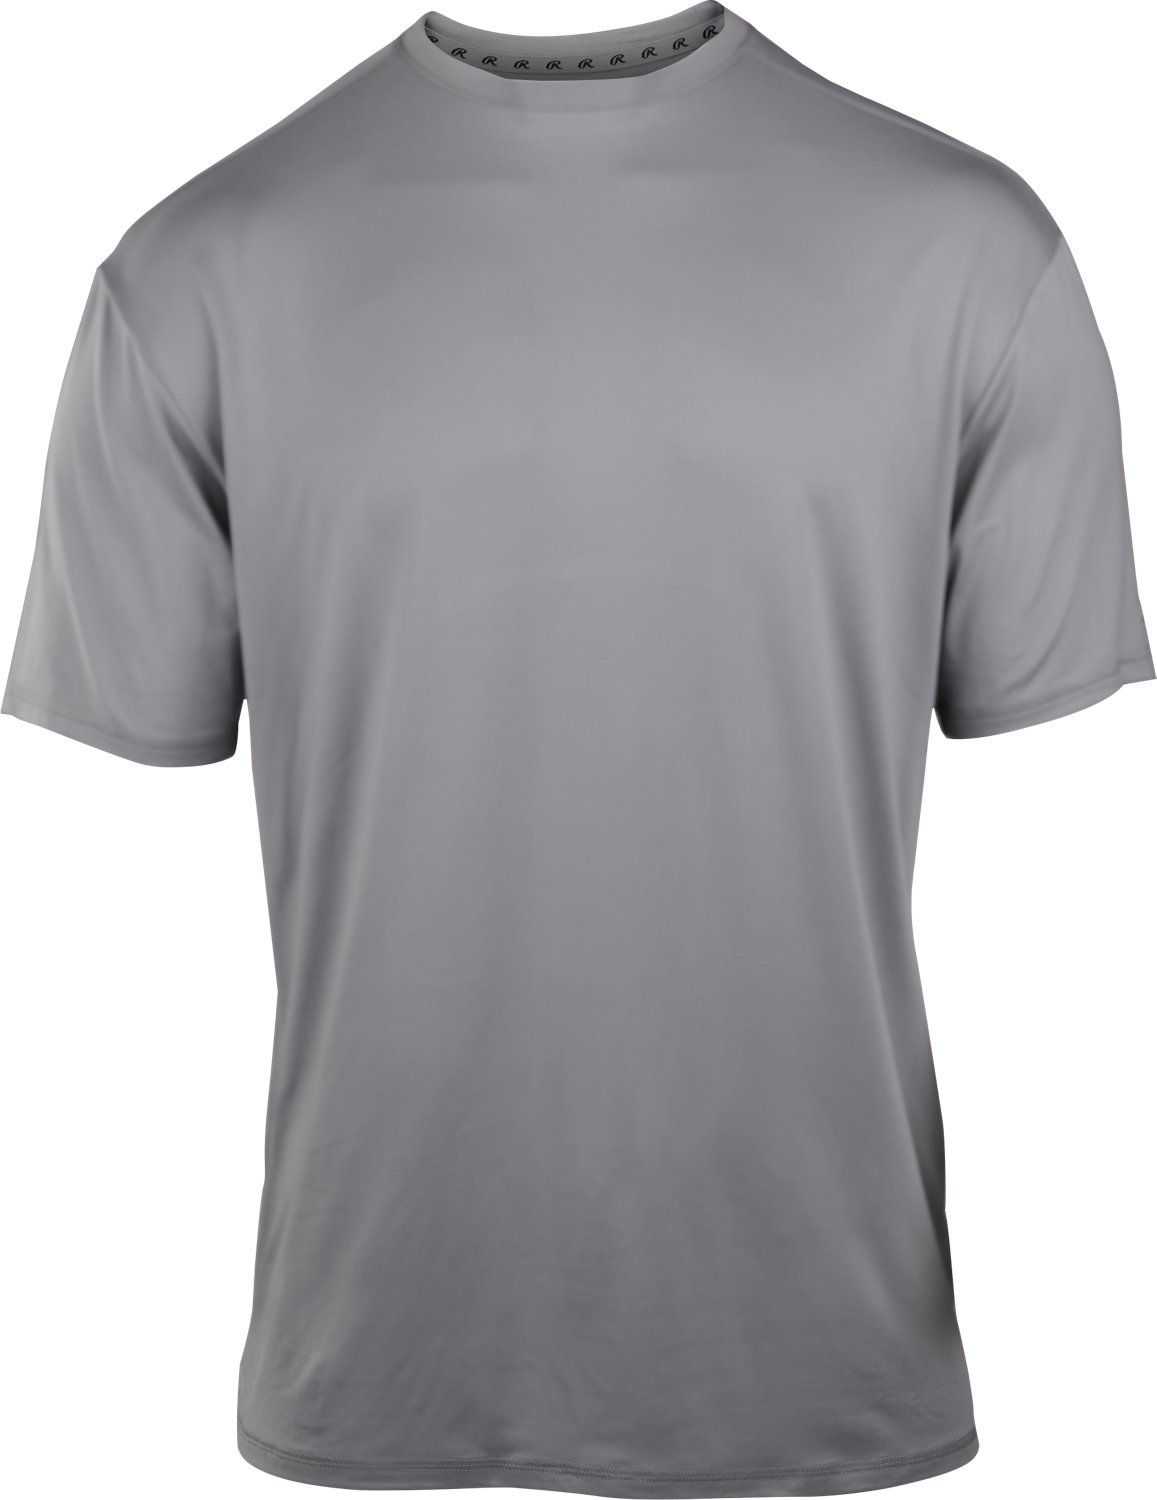 Rawlings Mens Athletic Fit Short Sleeve Shirt